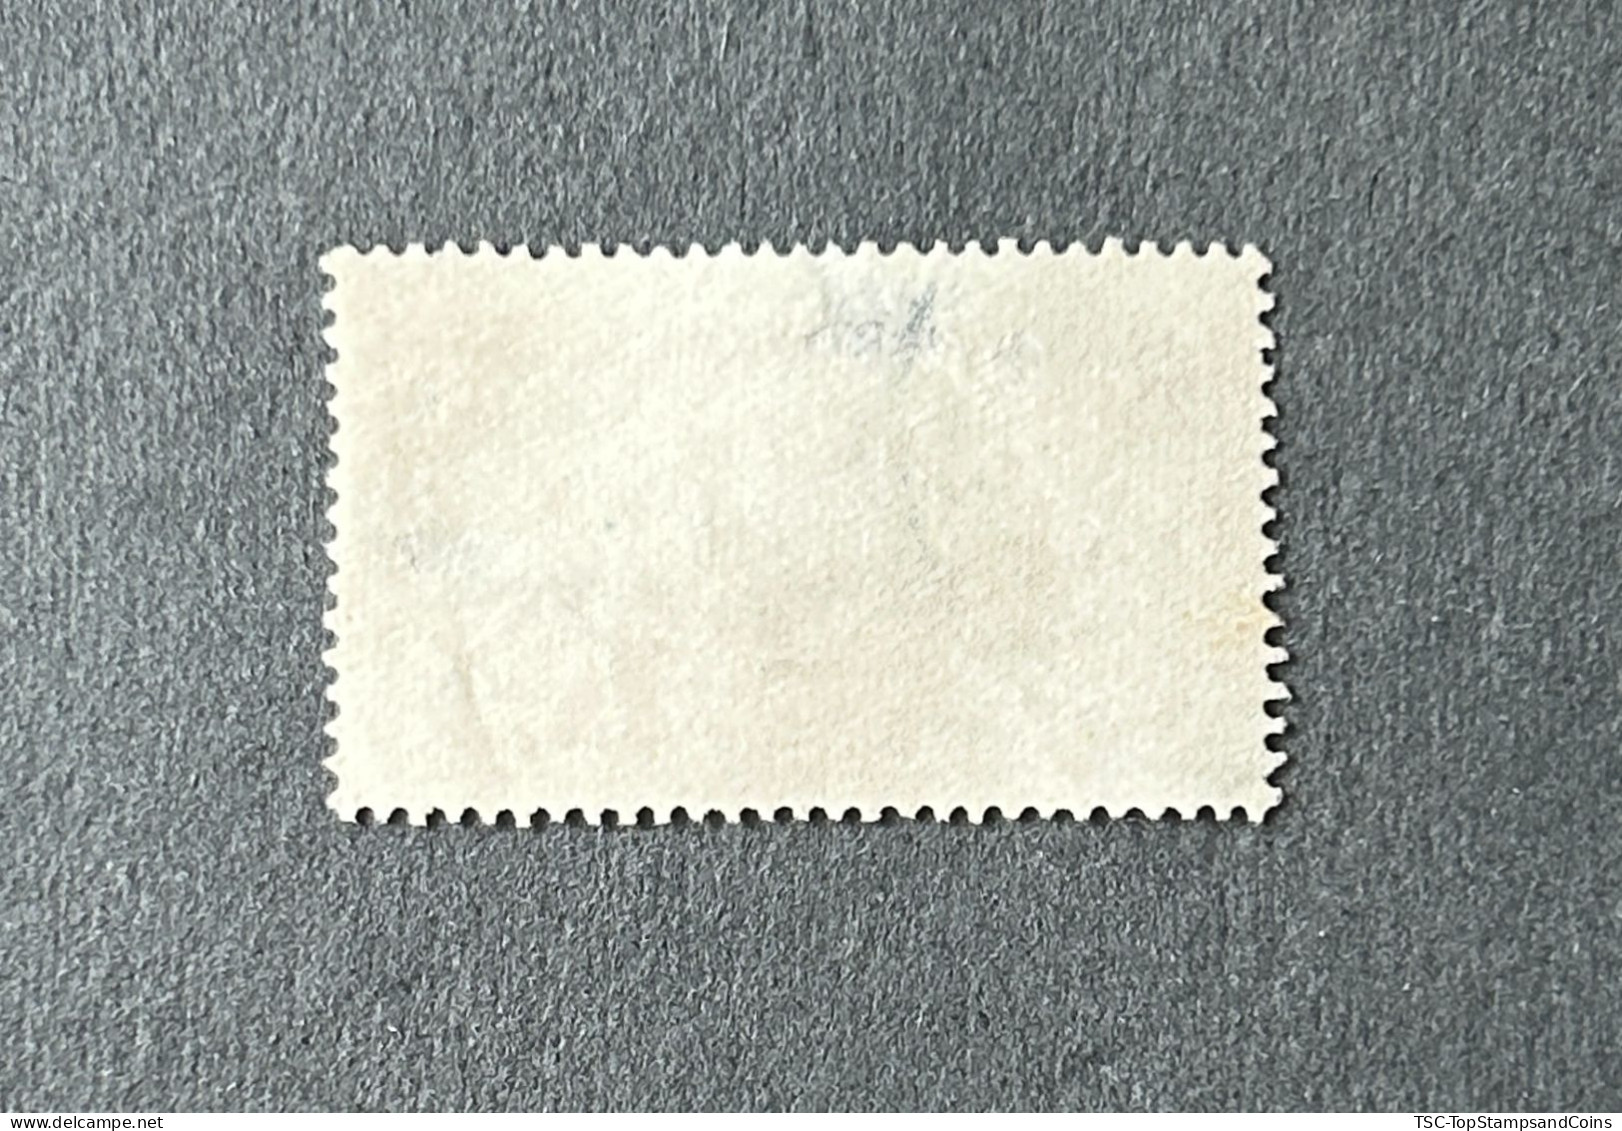 FRMAR0140U - Local Motives - Village De Basse Pointe - 25 C Used Stamp - Martinique 1933 - YT FR-MAR 140 - Usati